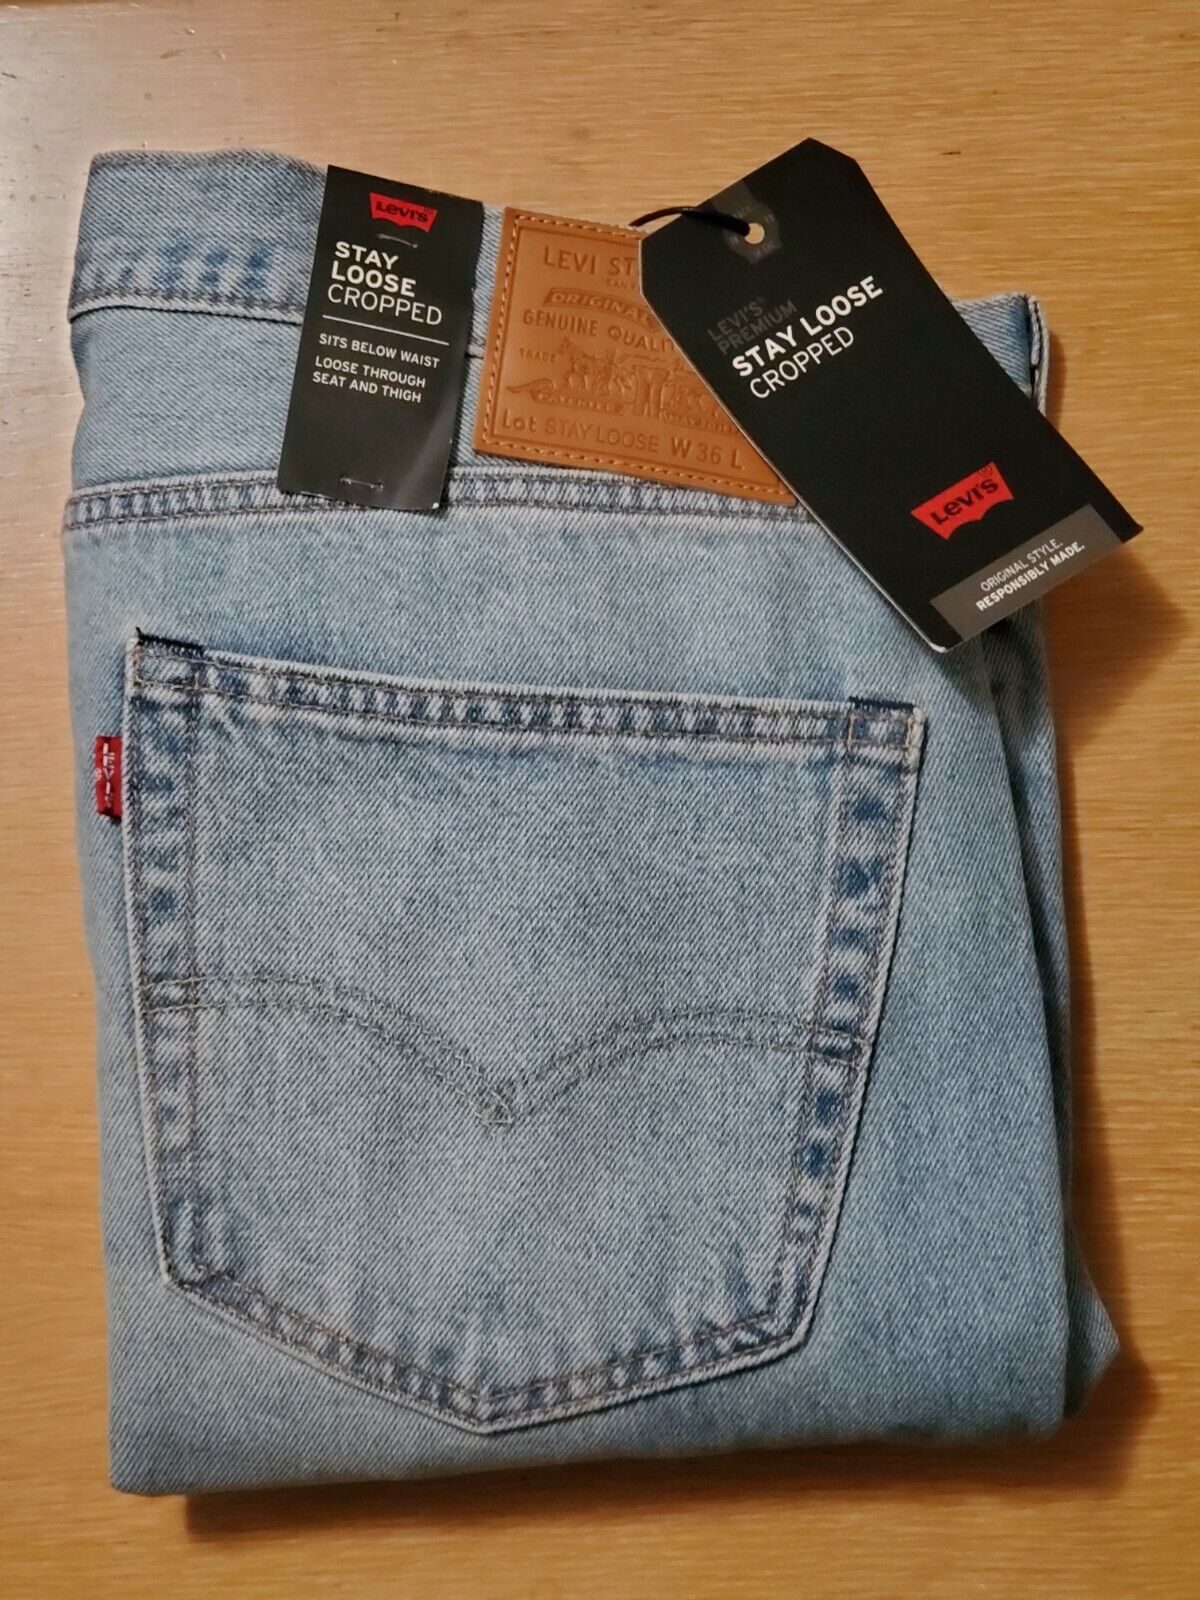 New Mens Blue Levis Premium STAY LOOSE Jeans Sz:36x25 Cropped Sits Below  Waist | eBay